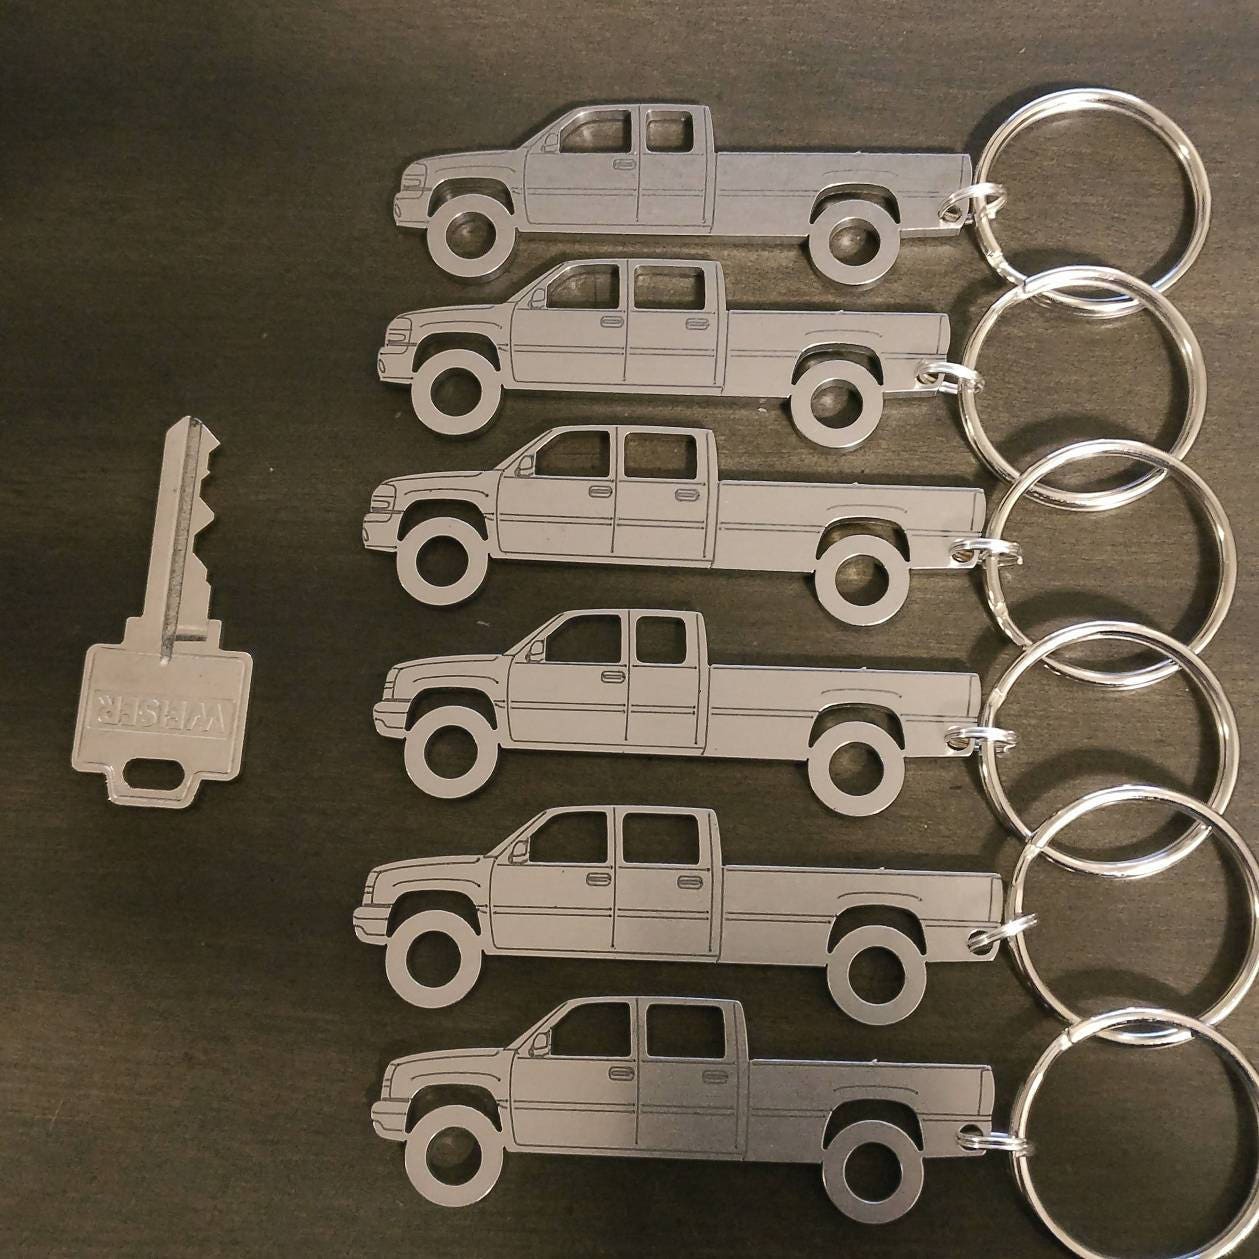  GMC NBS Truck Keychain